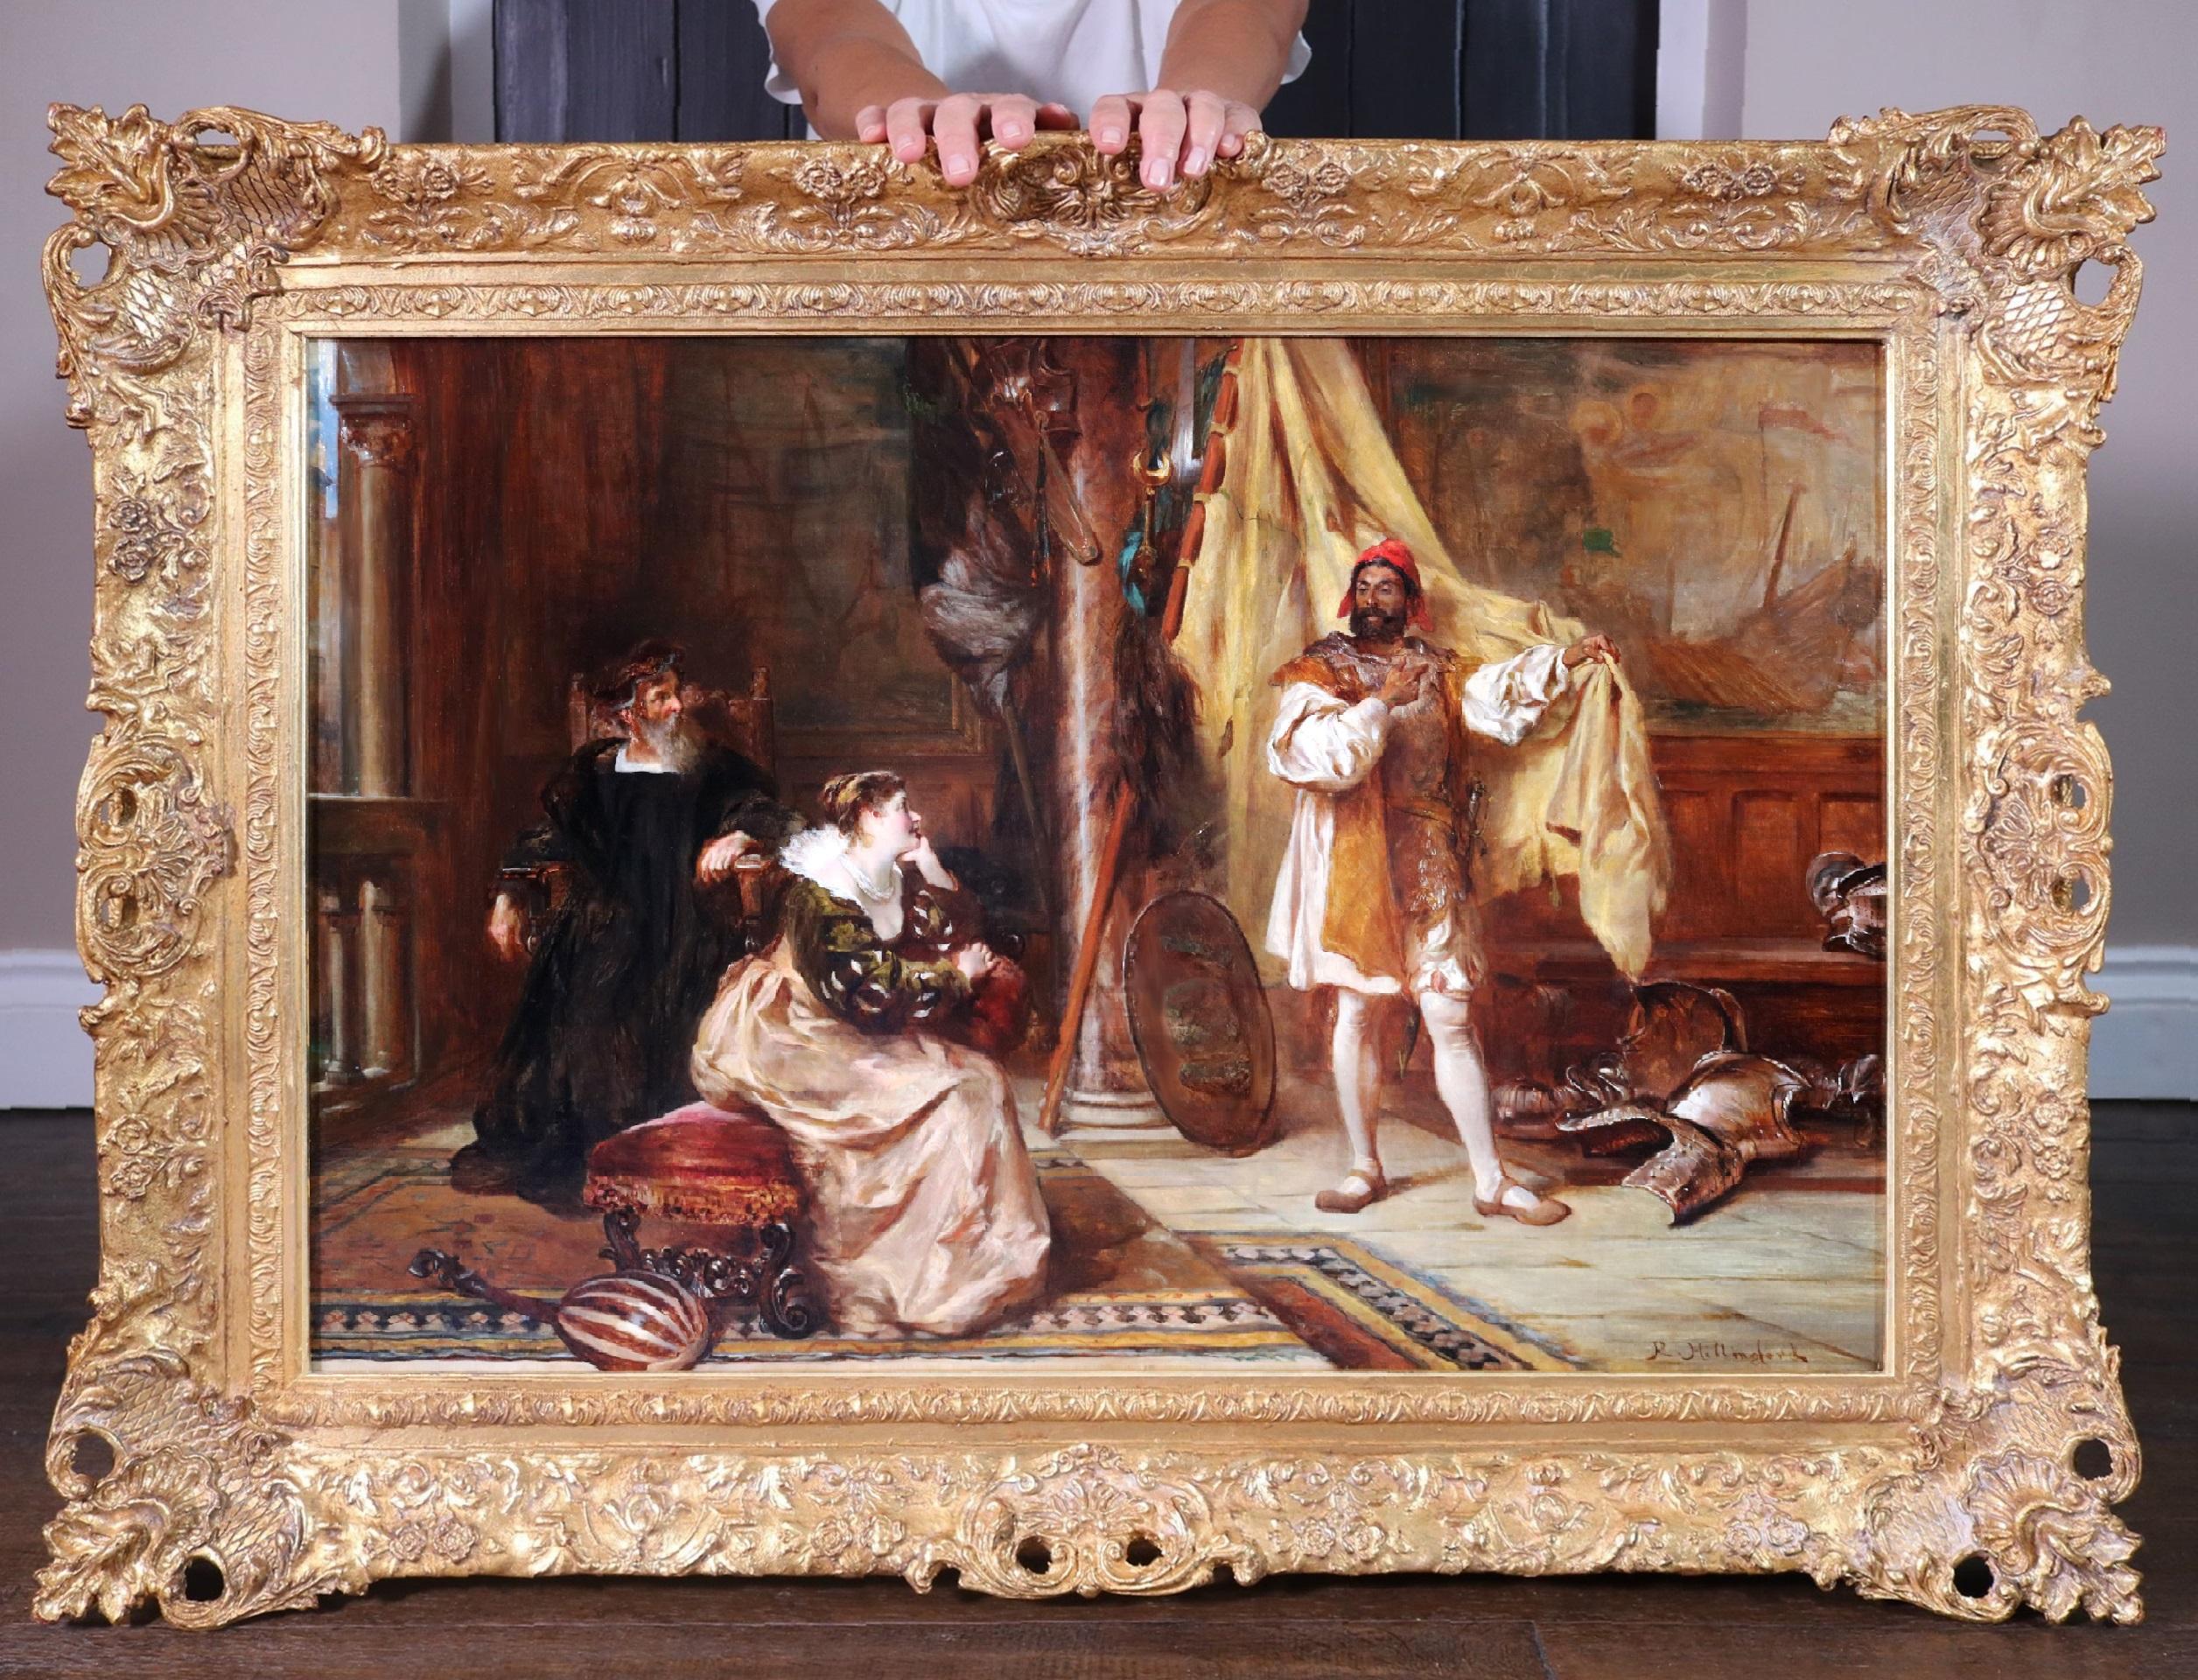 Robert Alexander Hillingford Portrait Painting - Othello & Desdemona - 19th Century Oil Painting of Shakespeare Play Venice Italy